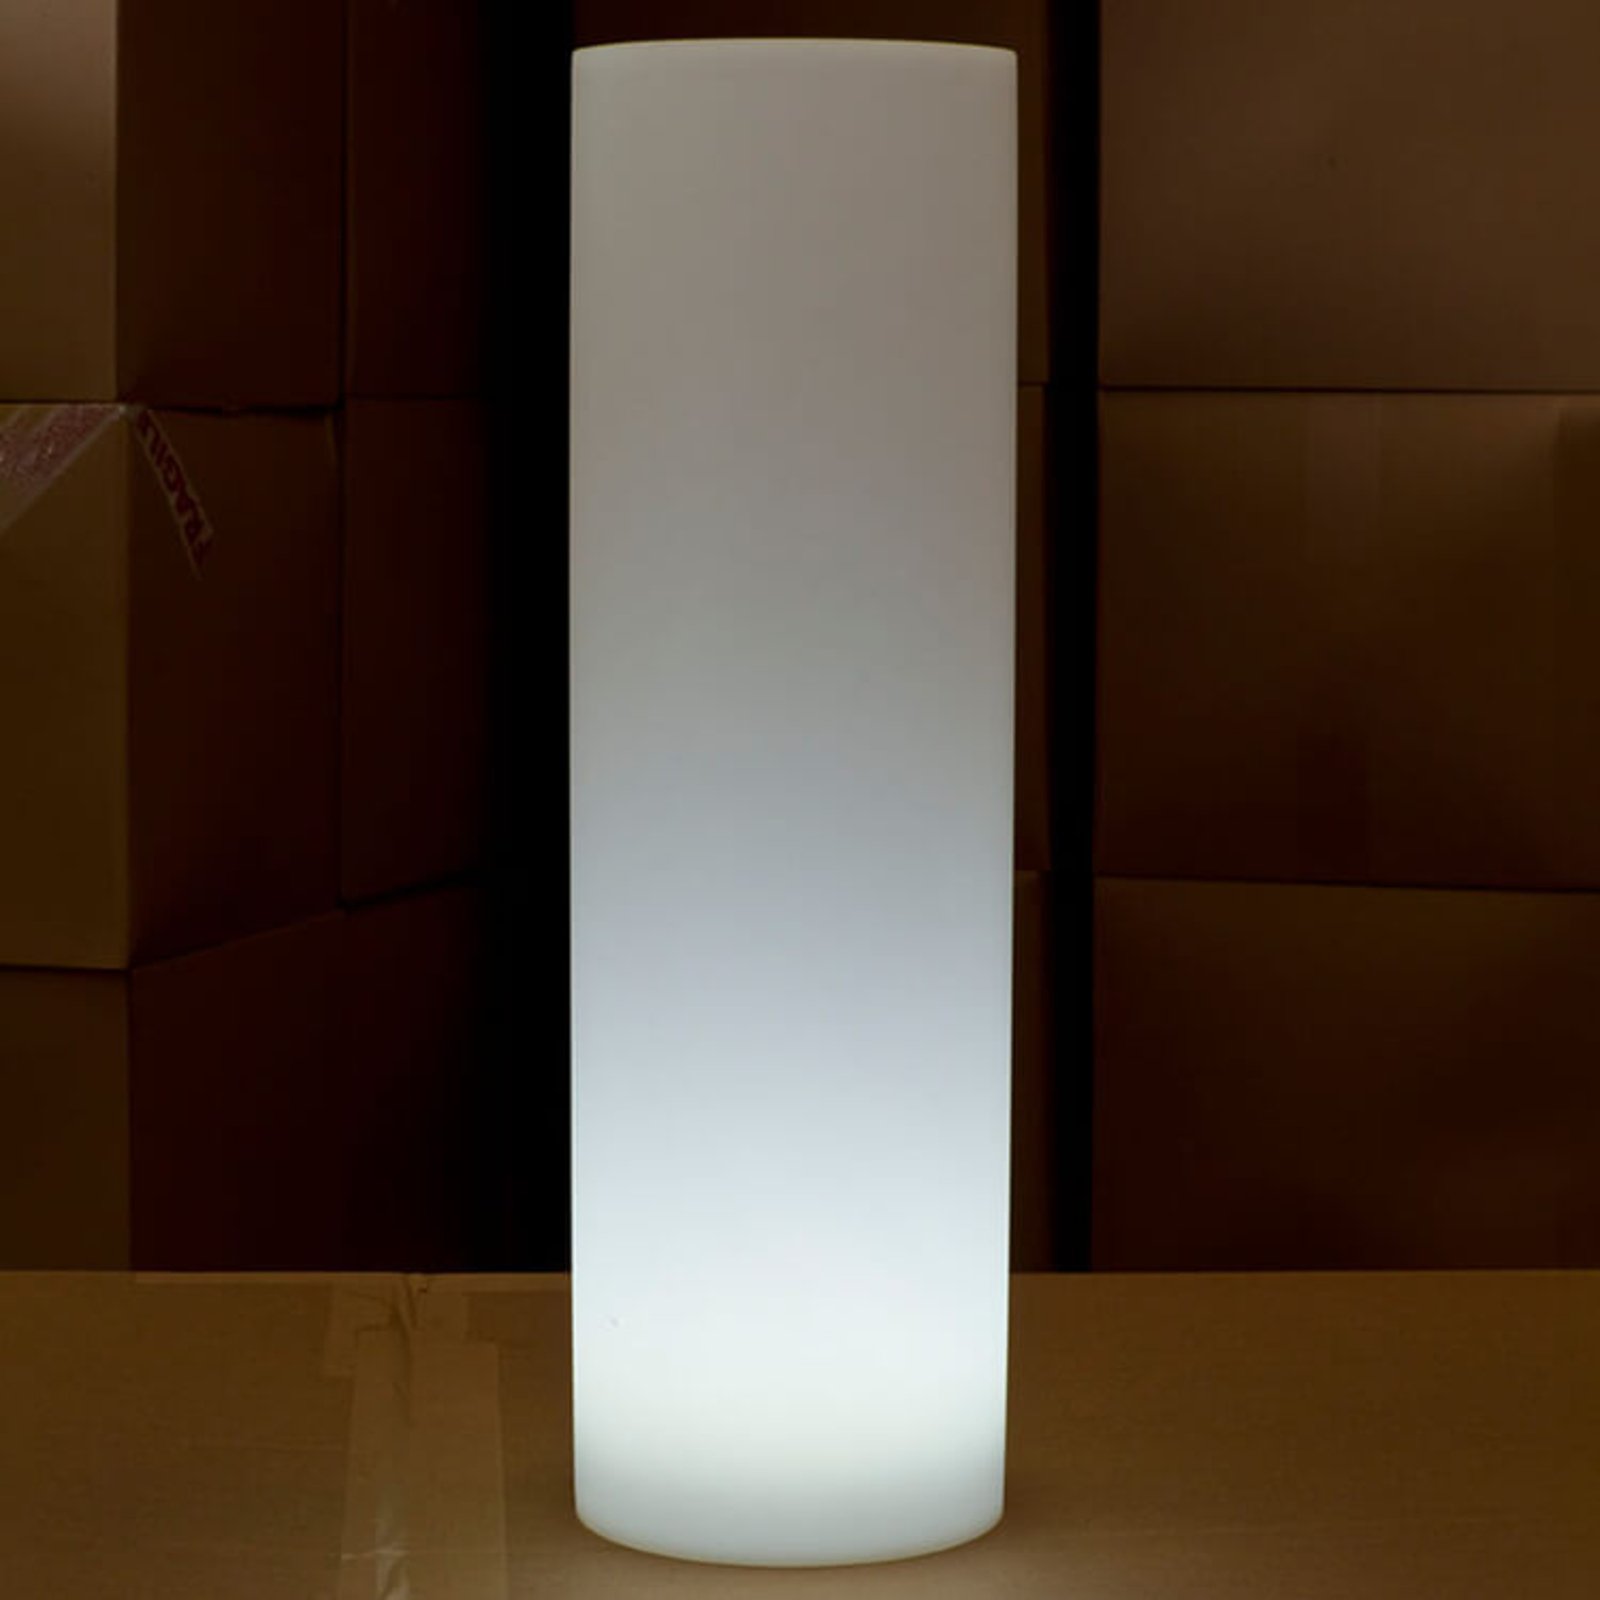 Tower - LED-dekorativt lys som kan styres via app